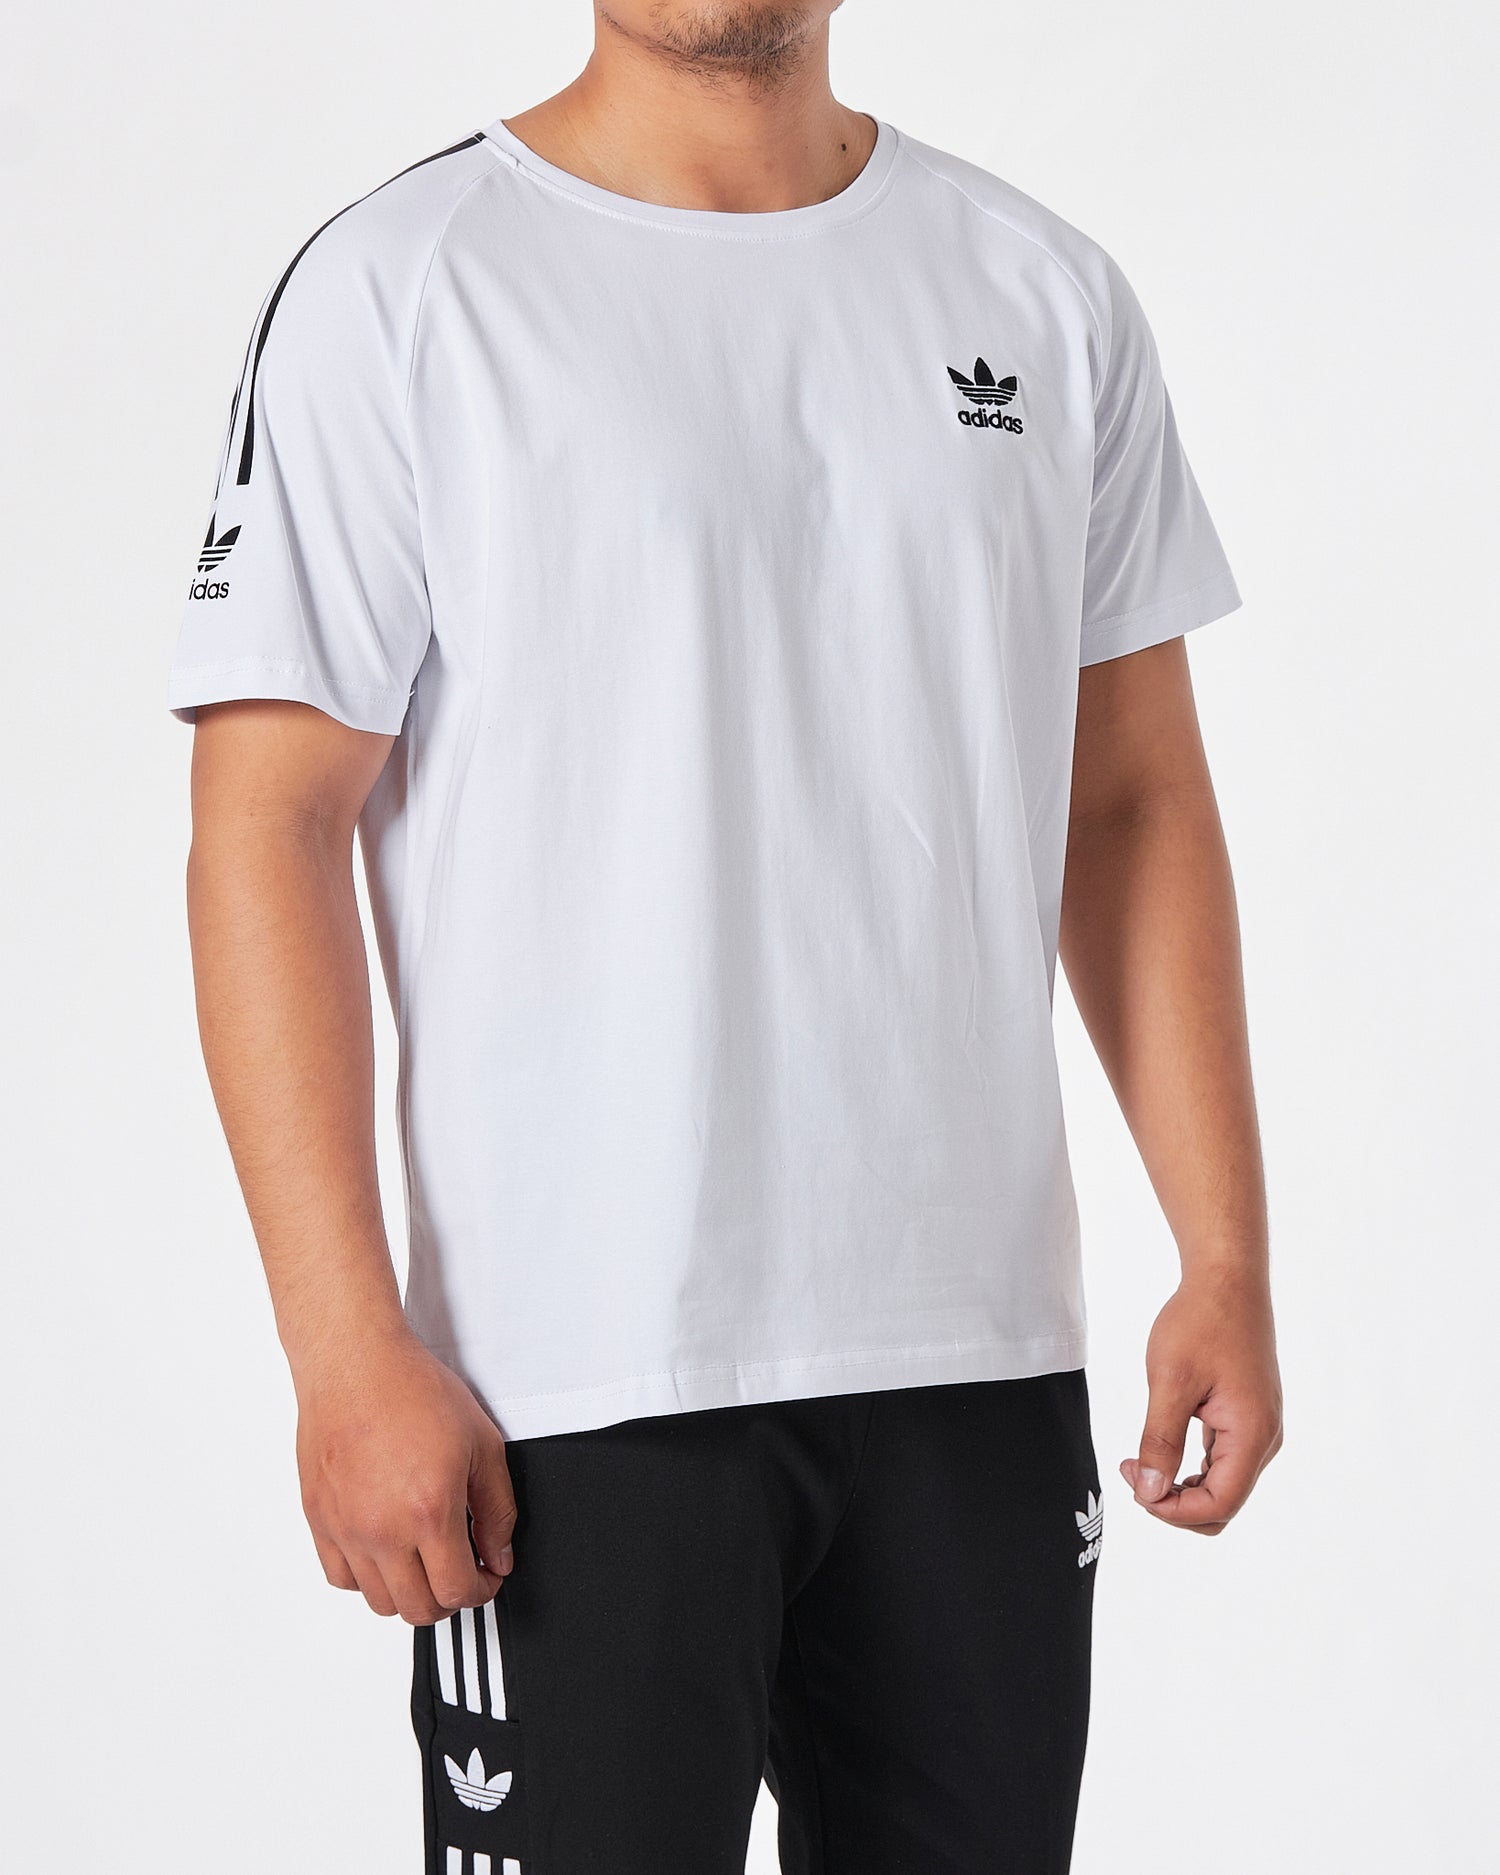 ADI Striped Sleeve Men White T-Shirt 13.90